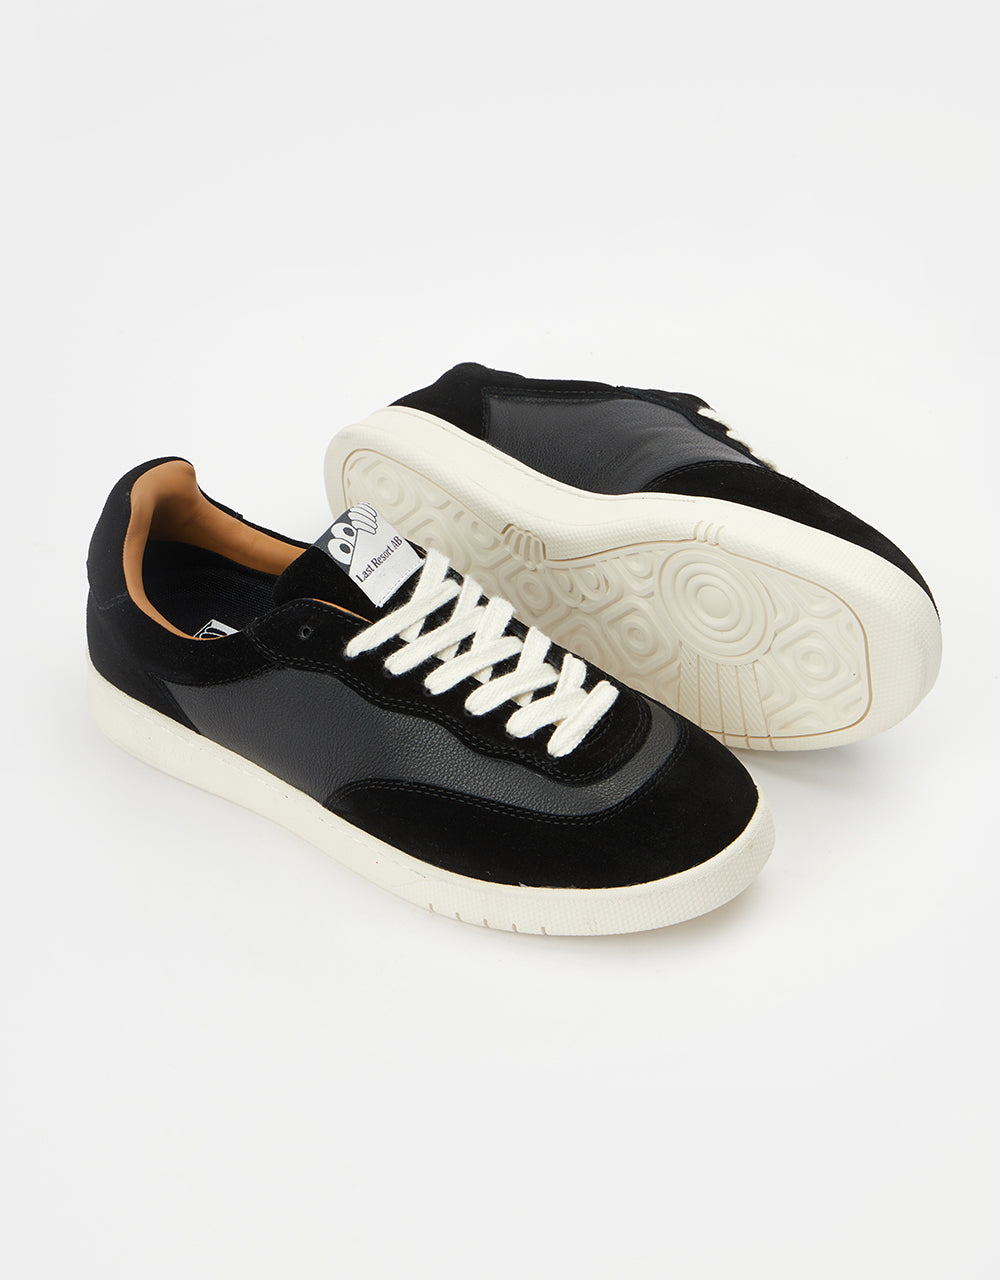 Last Resort AB CM001 Lo Skate Shoes - Black/White